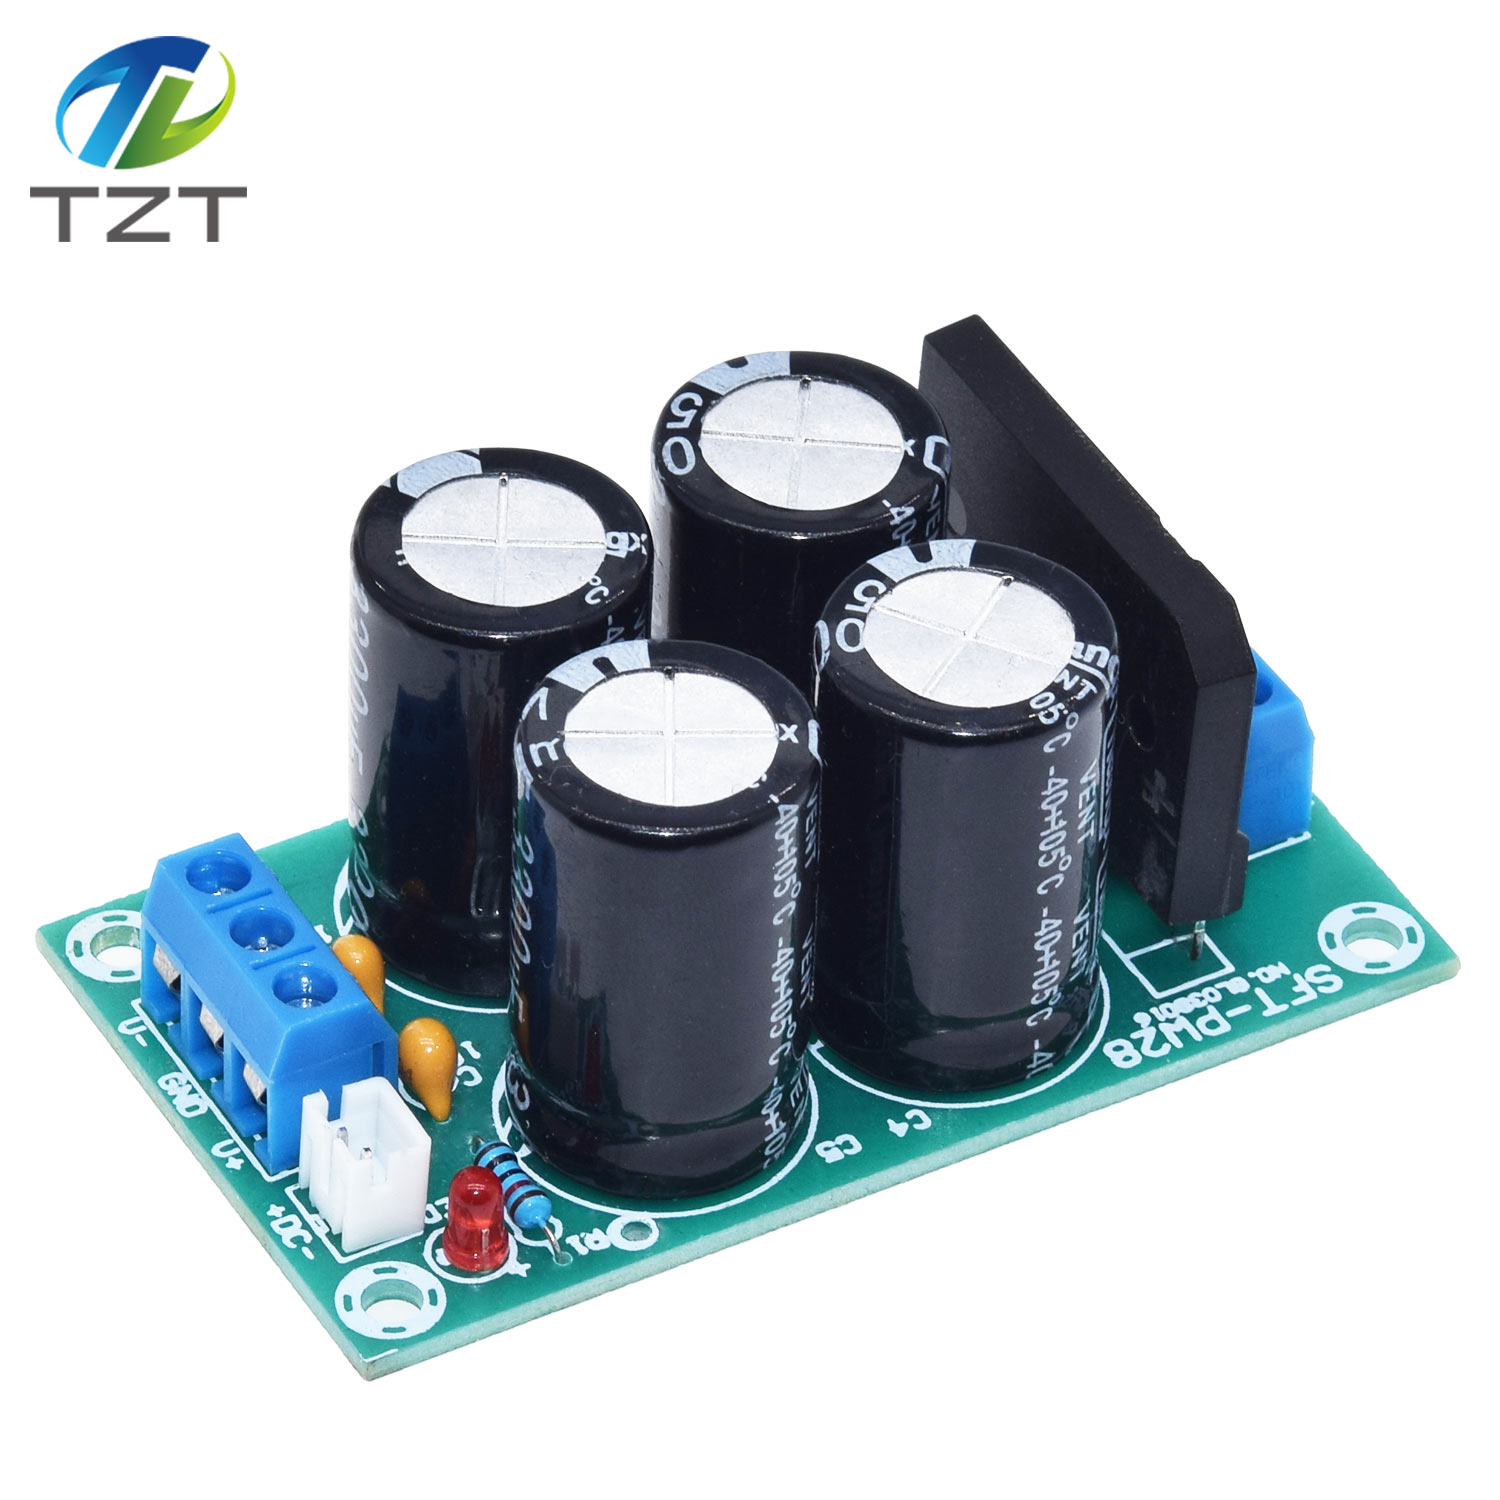 TZT PW28 Dual Power Filter Power Amplifier Board Rectifier High Current 25A Flat Bridge Unregulated Power Supply Board DIY